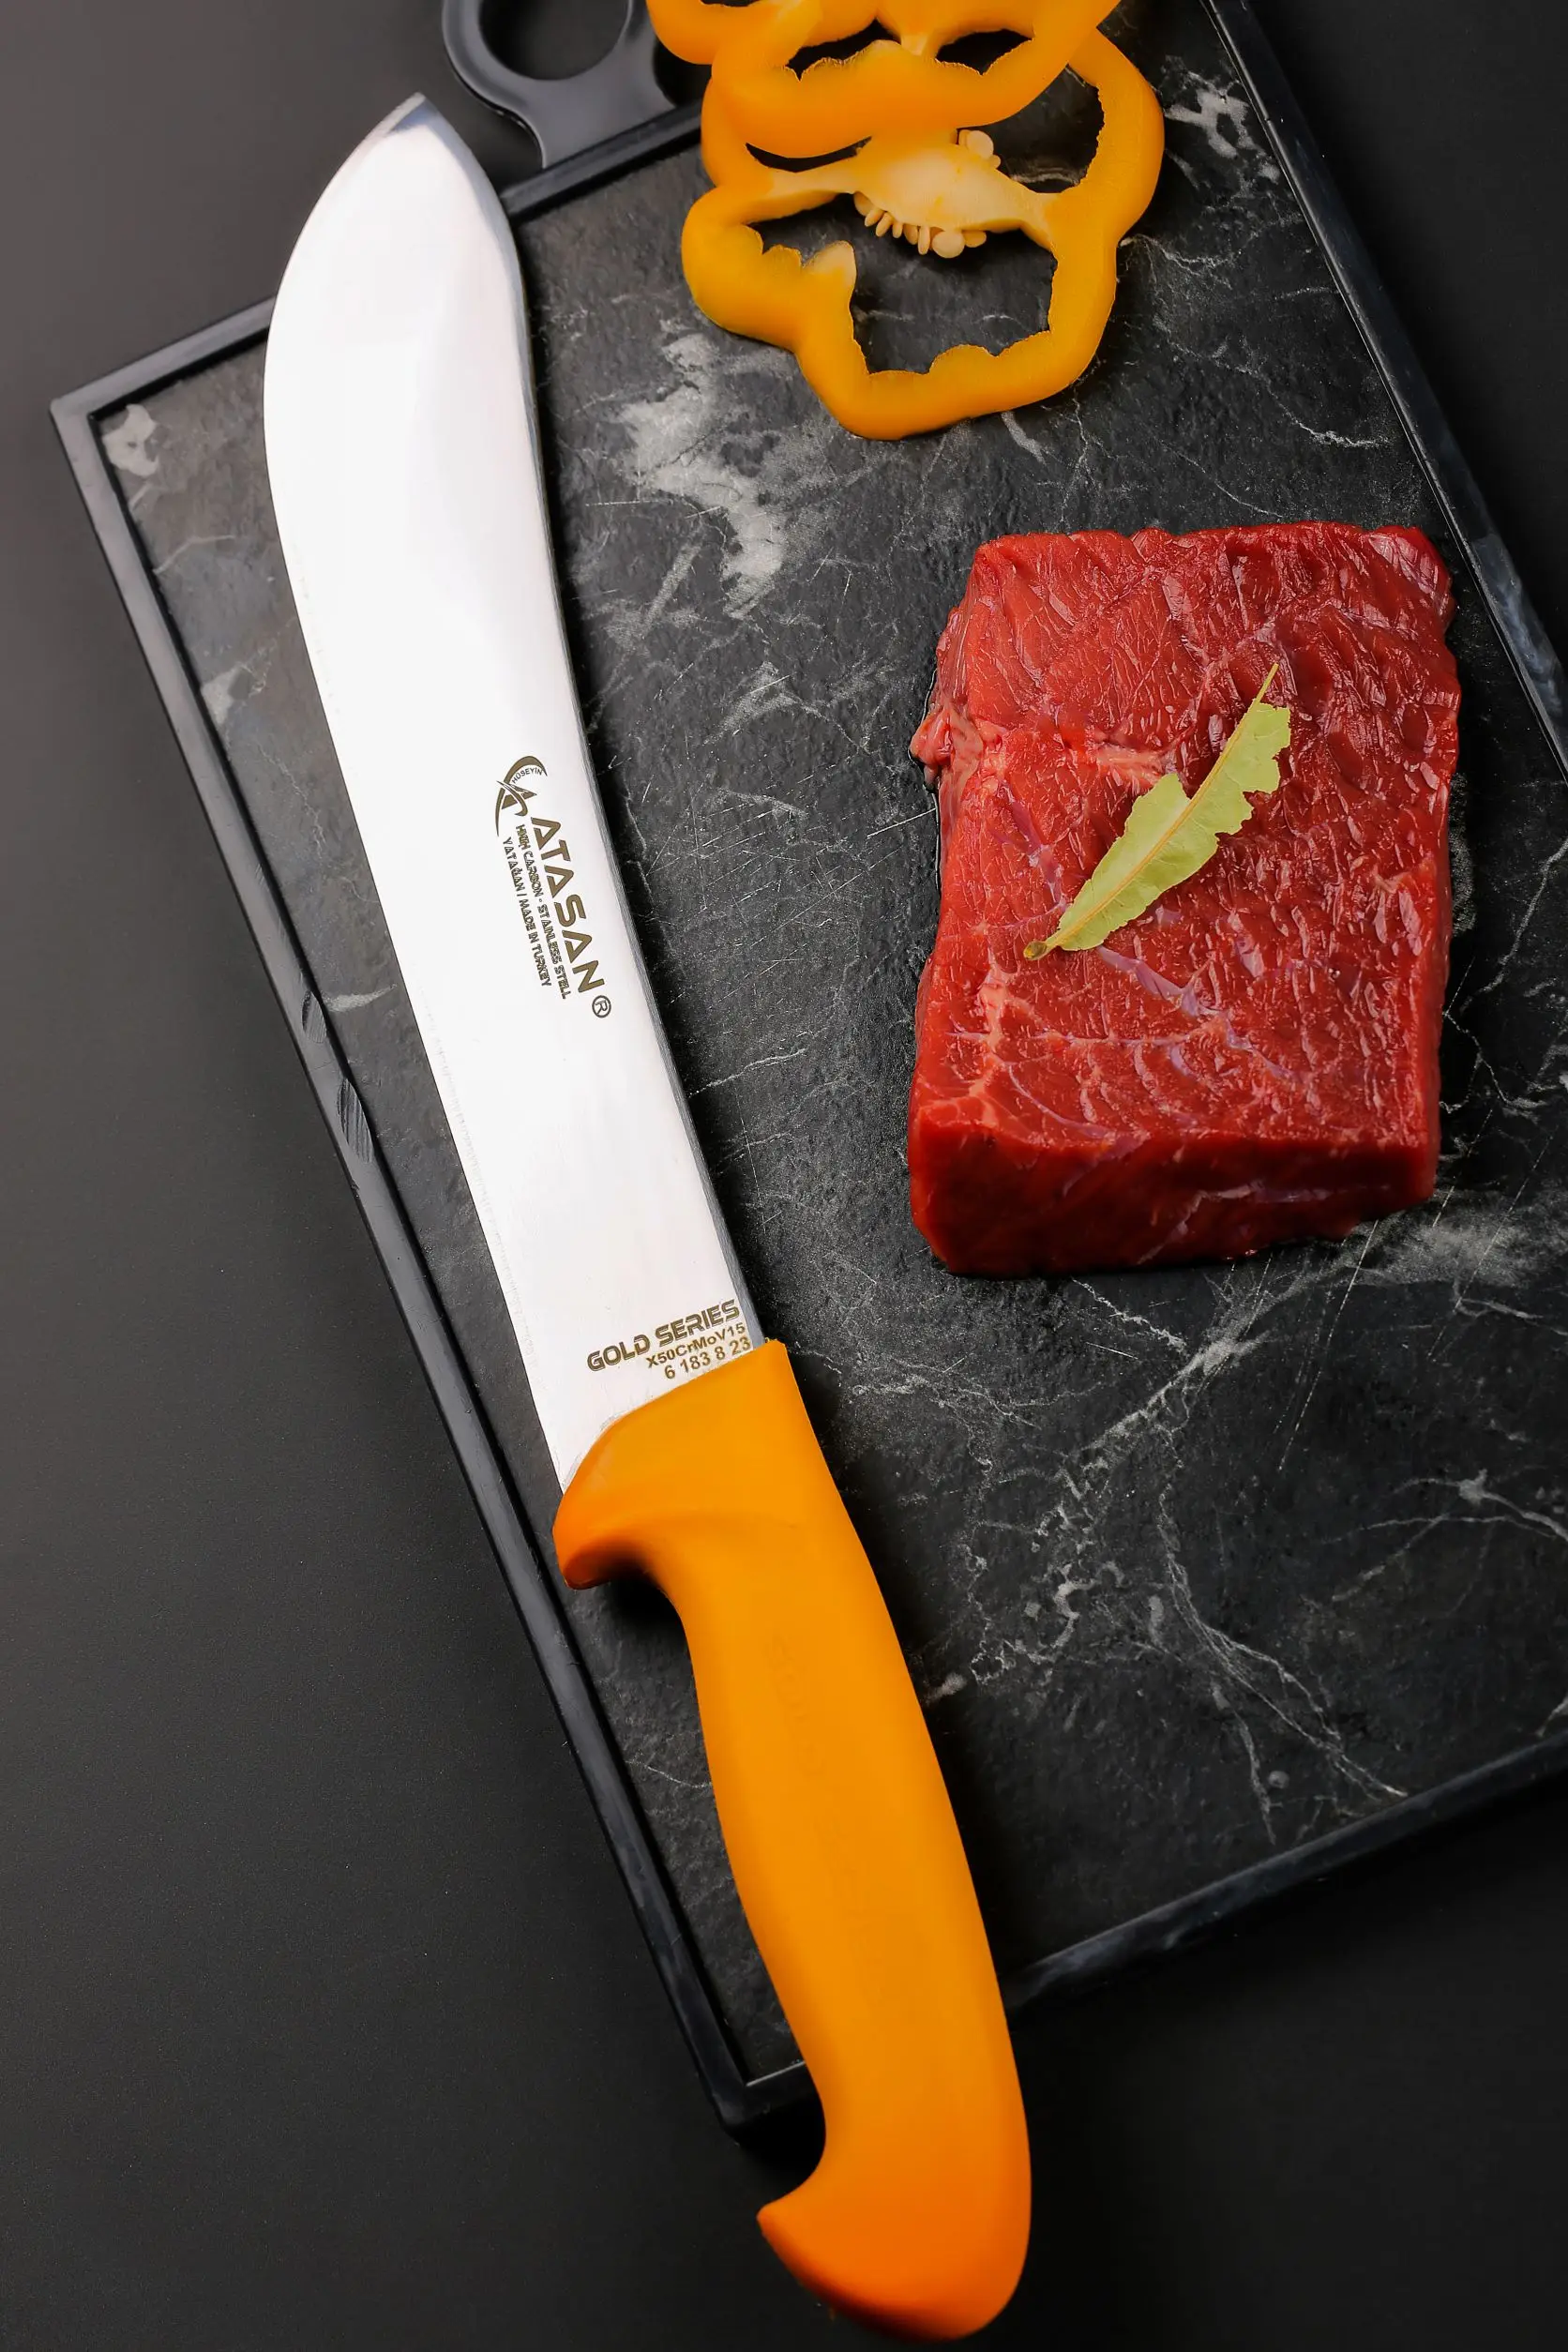 Professional Steak Knife High Quality Stainless Steel Corrugated Steak Kitchen Chef Knife Handmade Nusret Saltbae Made in Turkey